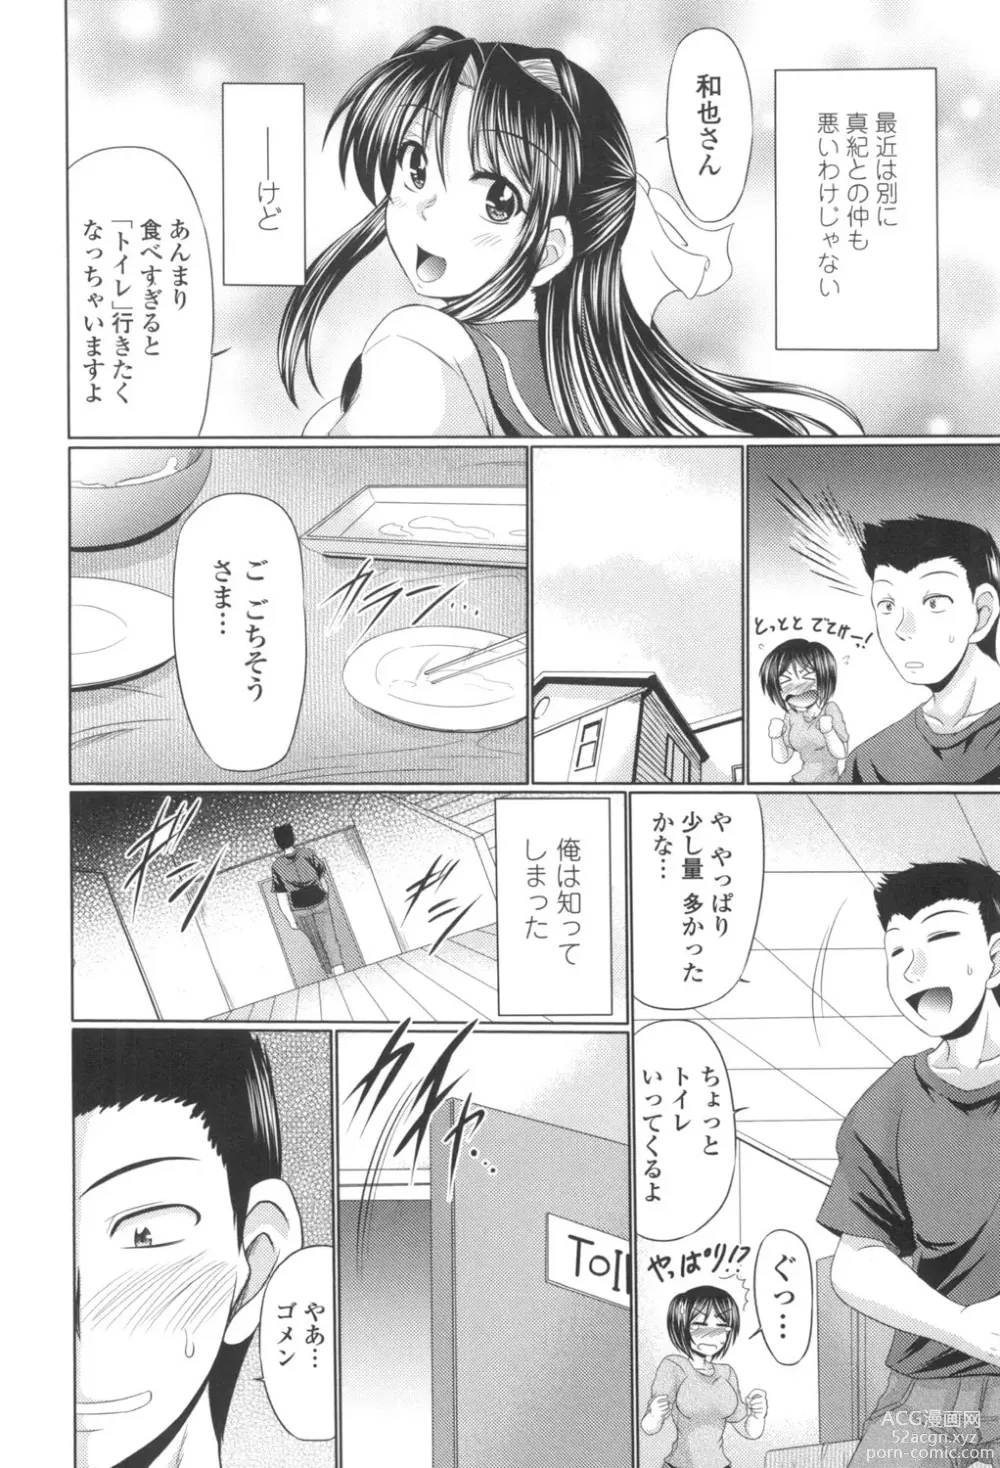 Page 7 of manga Otome Gokoro